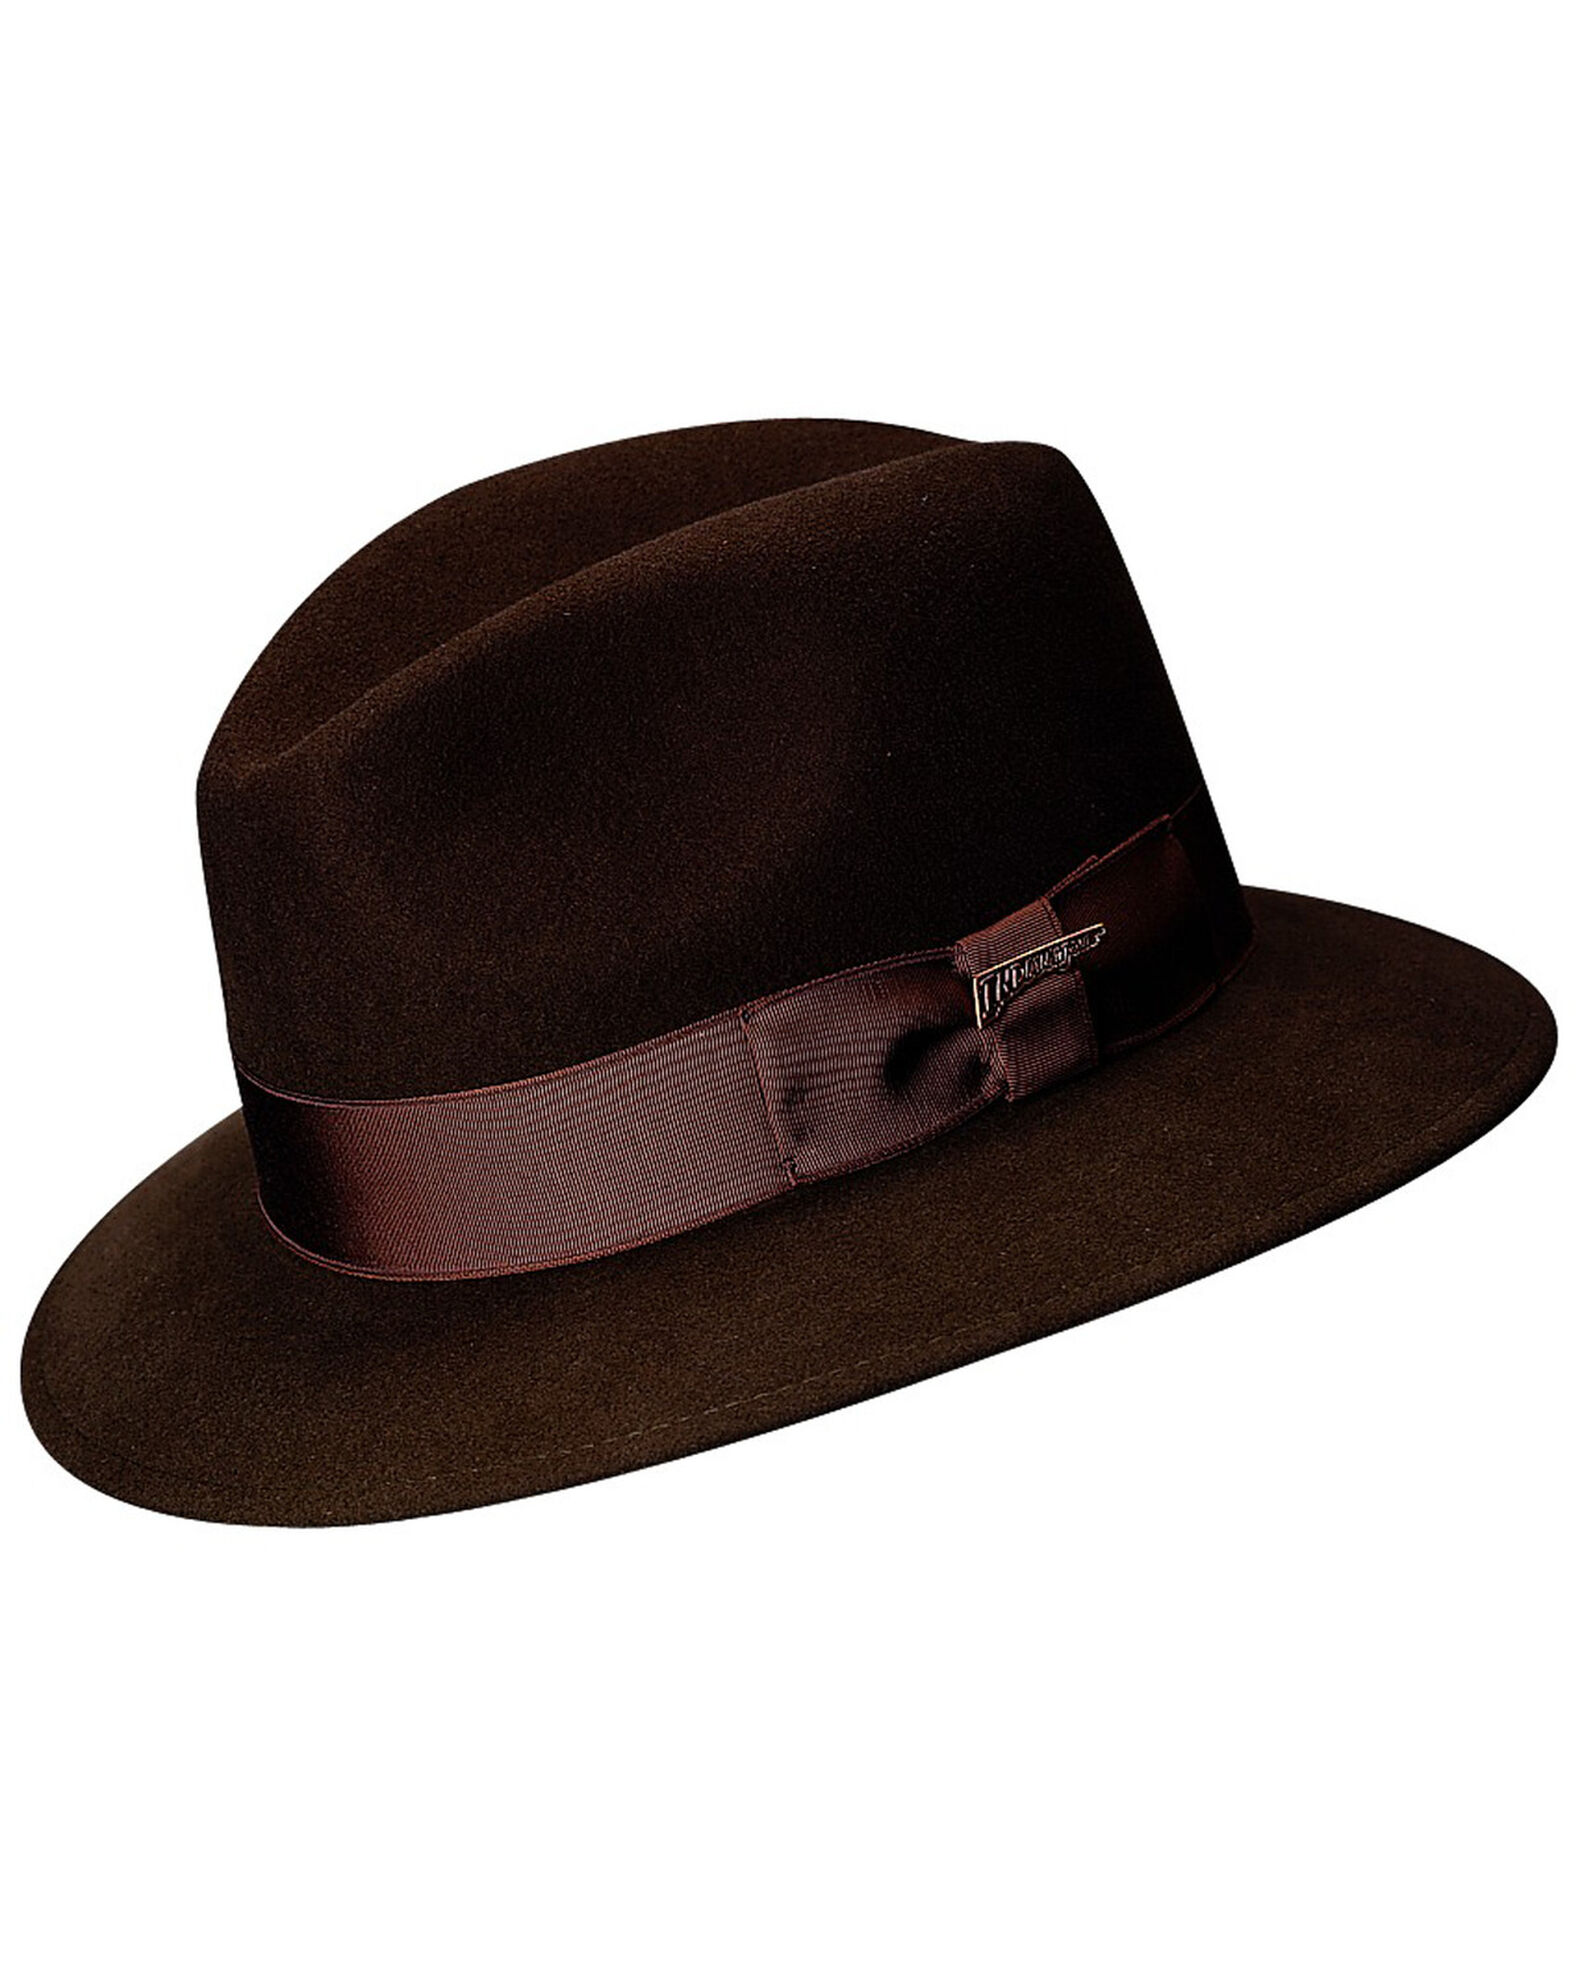 Scala Men's Brown Wool Felt Safari Hat